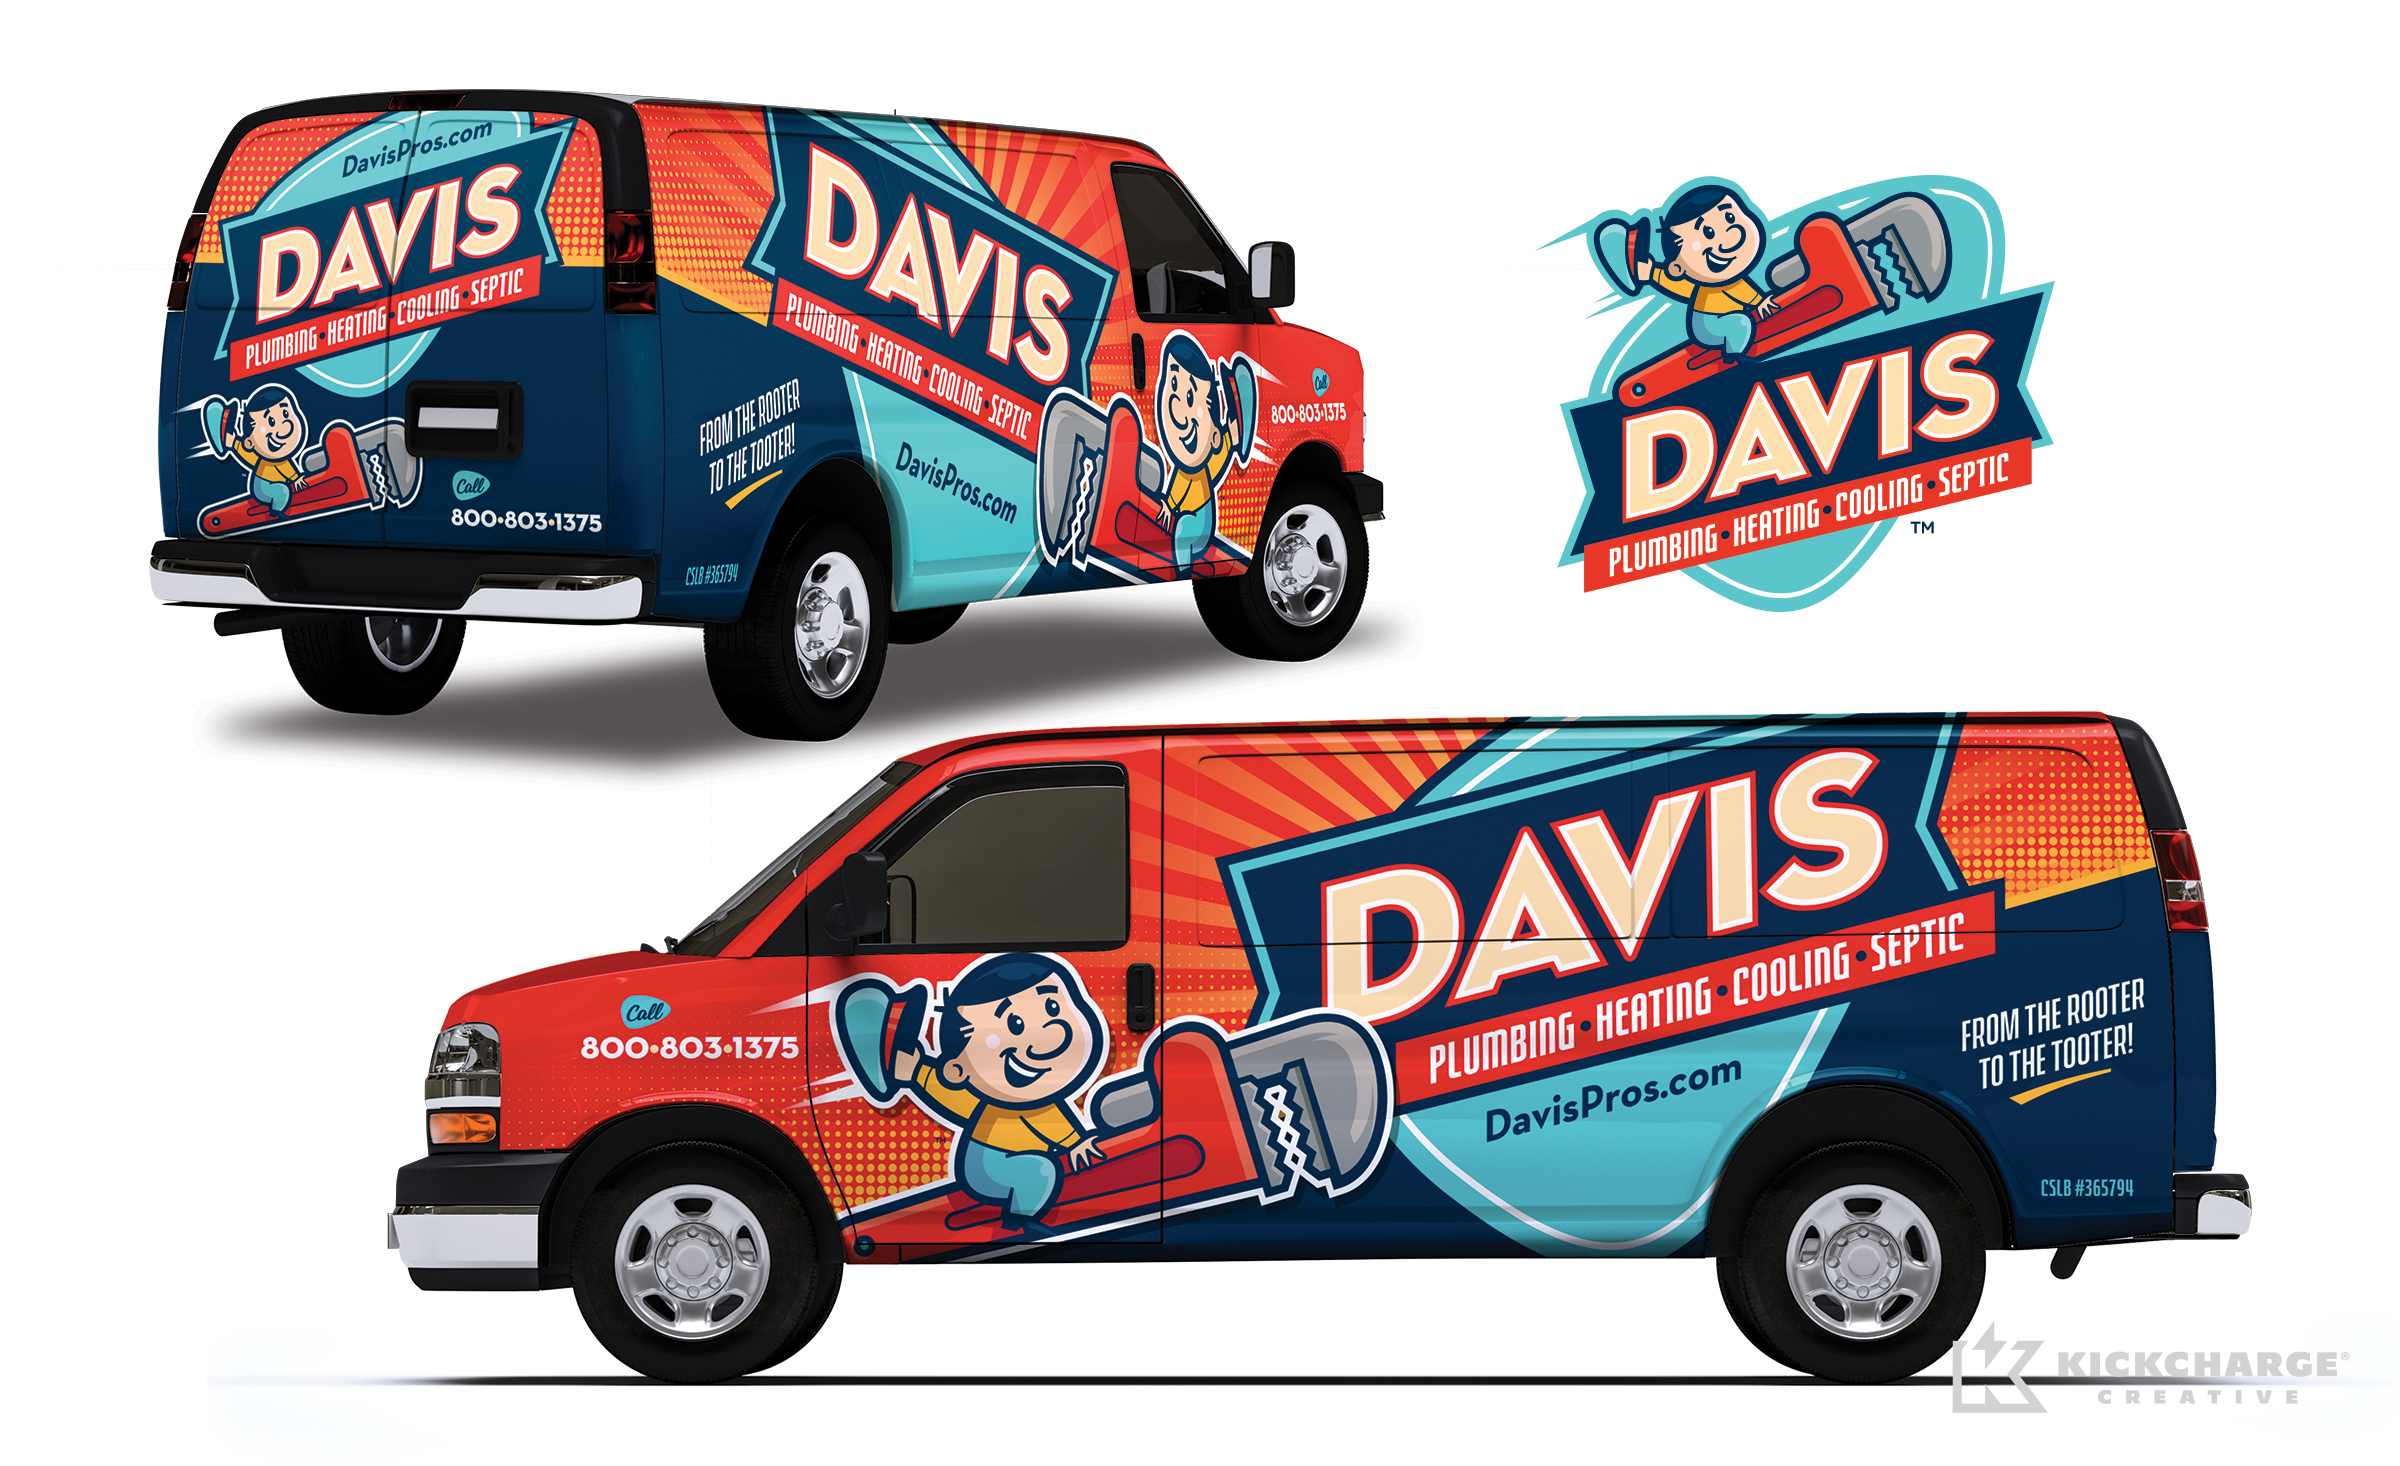 Truck wrap design for Davis Plumbing, Heating, Cooling & Septic